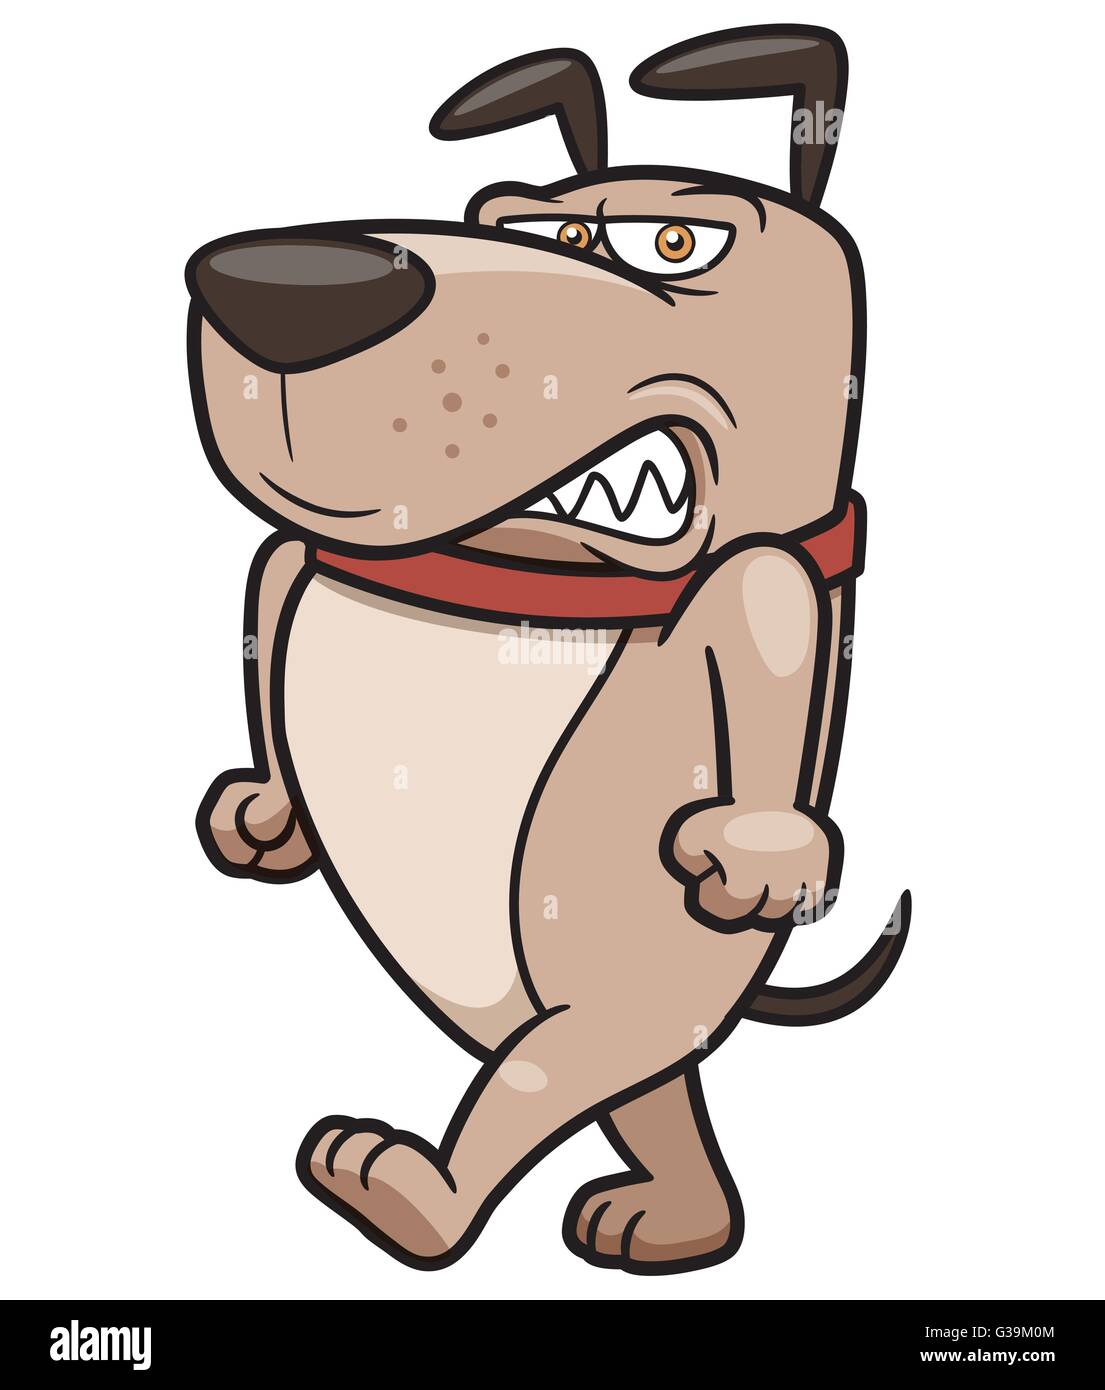 Vector illustration of Angry Dog Cartoon Stock Vector Image & Art - Alamy